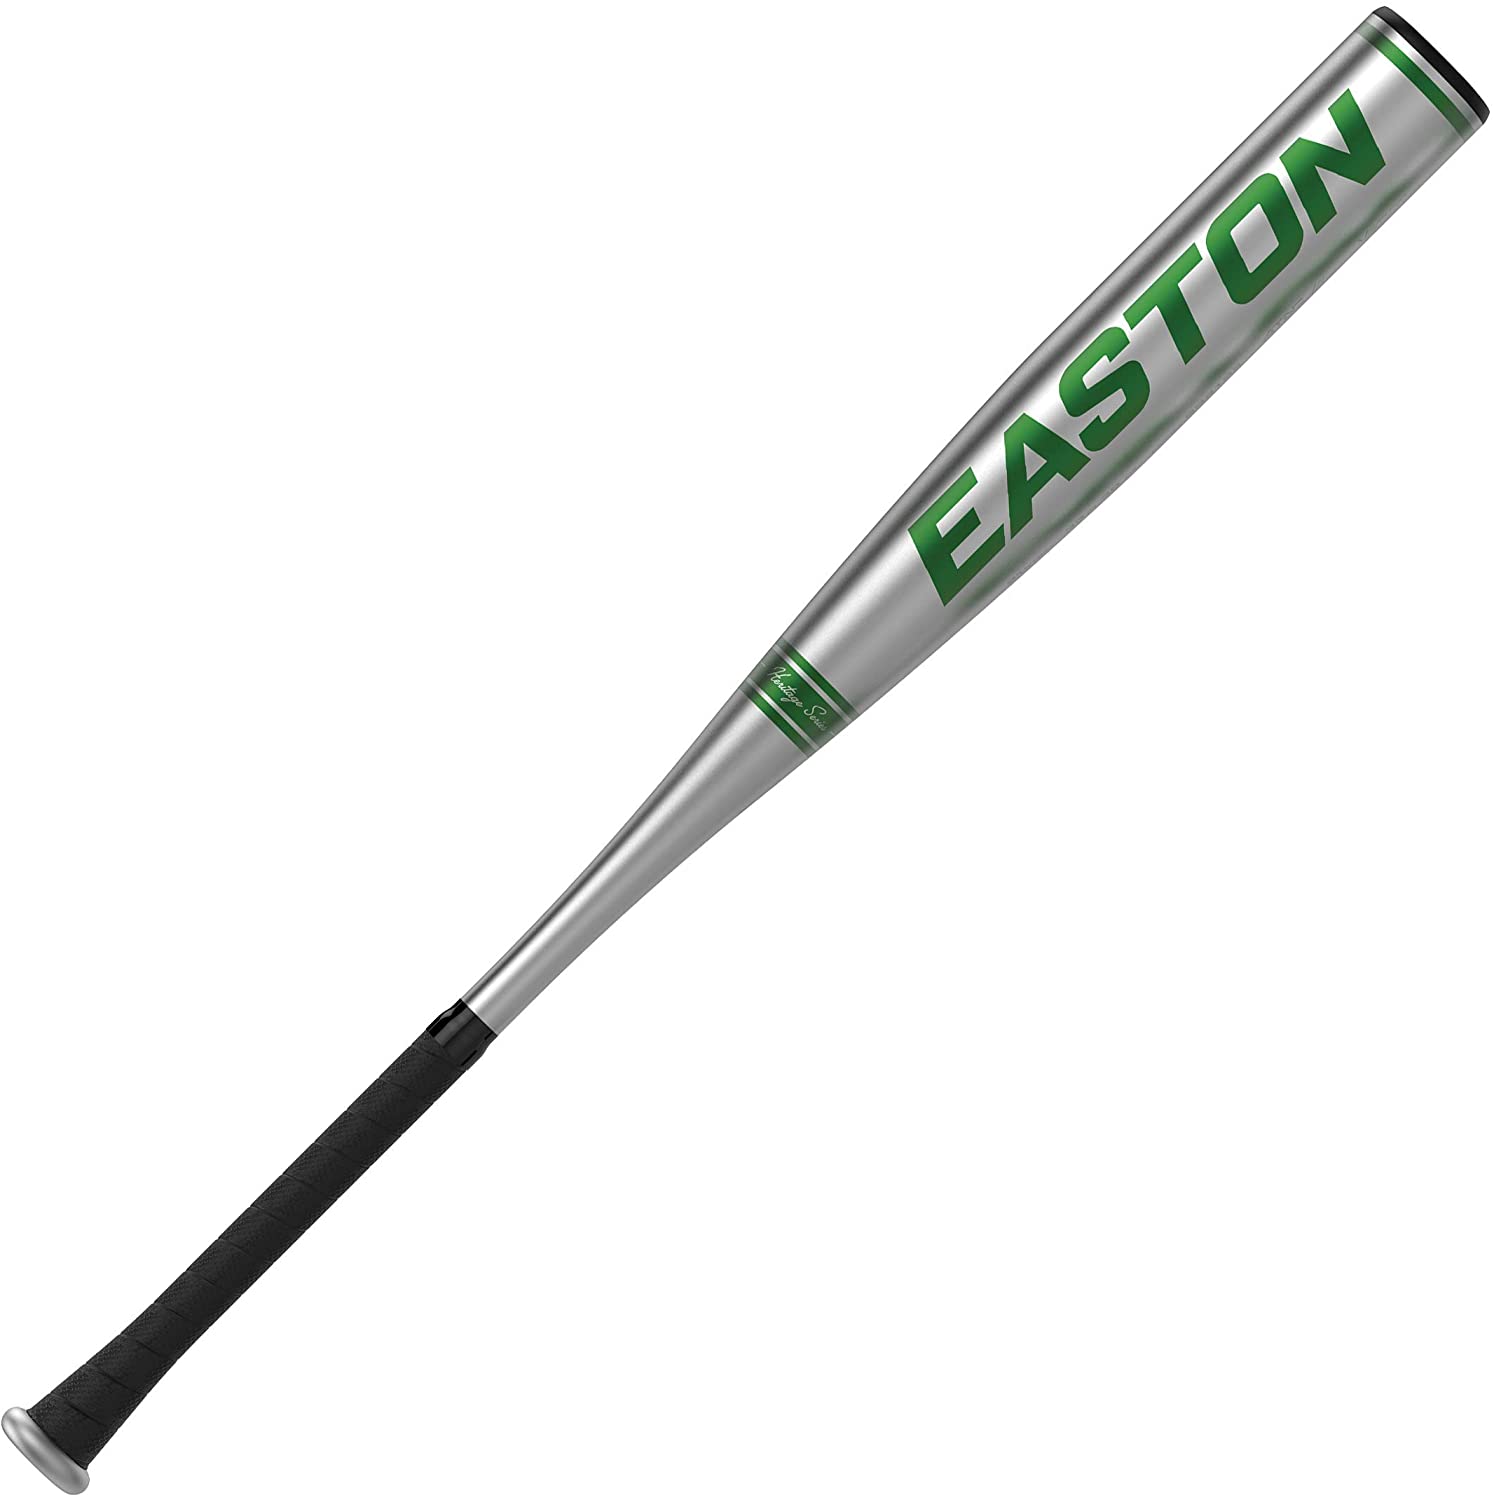 easton-b5-pro-big-barrel-3-bbcor-baseball-bat-32-inch-29-oz BB21B5-3229 Easton  <span>THE GREEN EASTON IS BACK! First introduced in 1978 the original